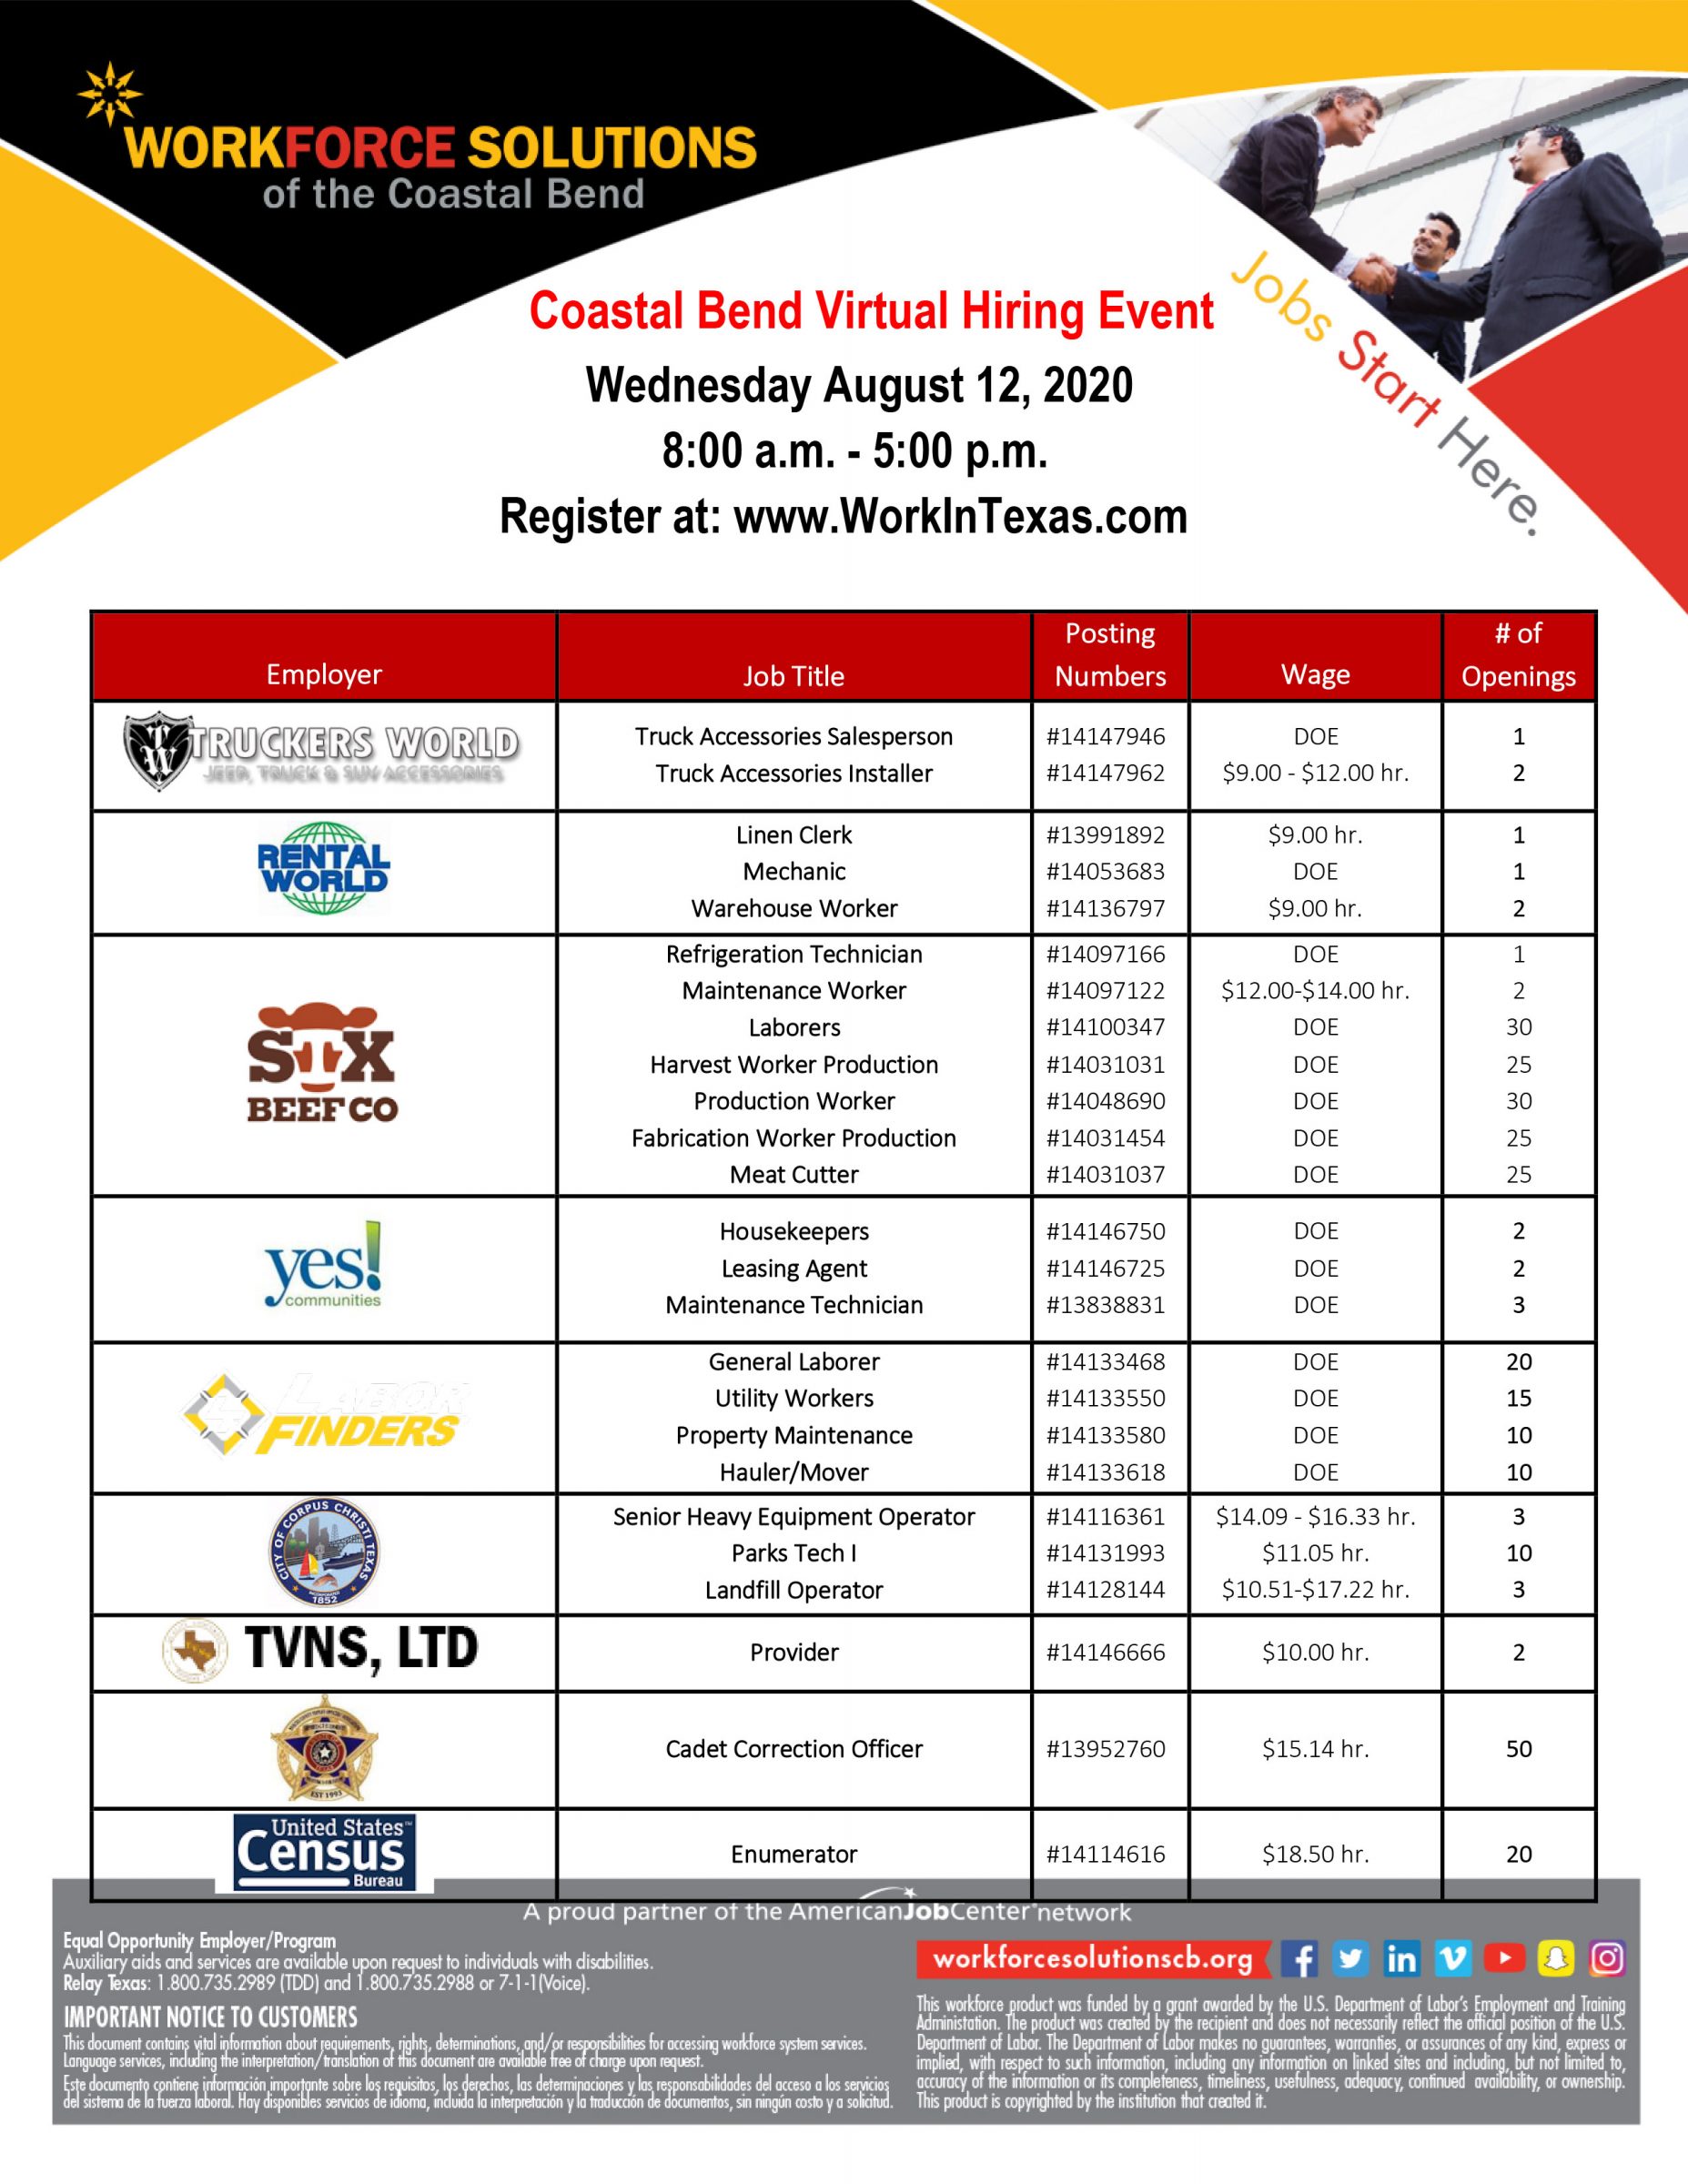 Register at workintexas.com for the Coastal bend Virtual Hiring Event on Wednesday, April 12, 2020, 8:00 A.M. - 5:00 P.M.